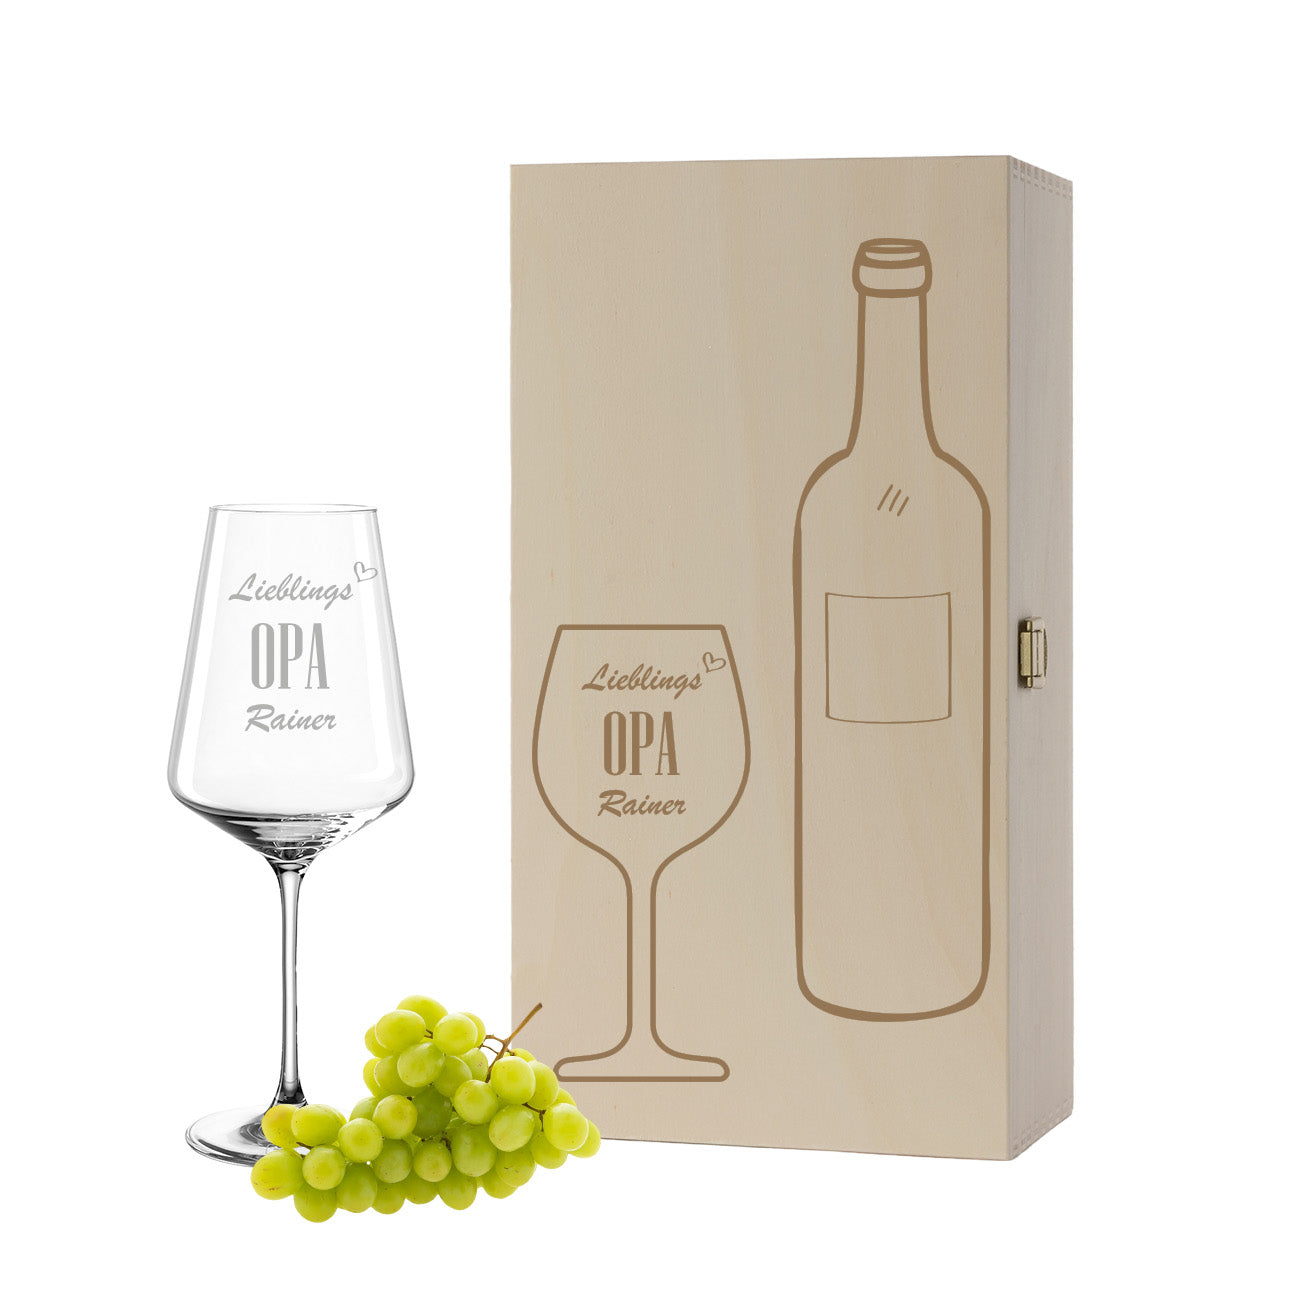 Weinglas mit Gravur Leonardo Puccini "LIEBLINGS OPA" inkl. Holzbox klein mit Wunschname